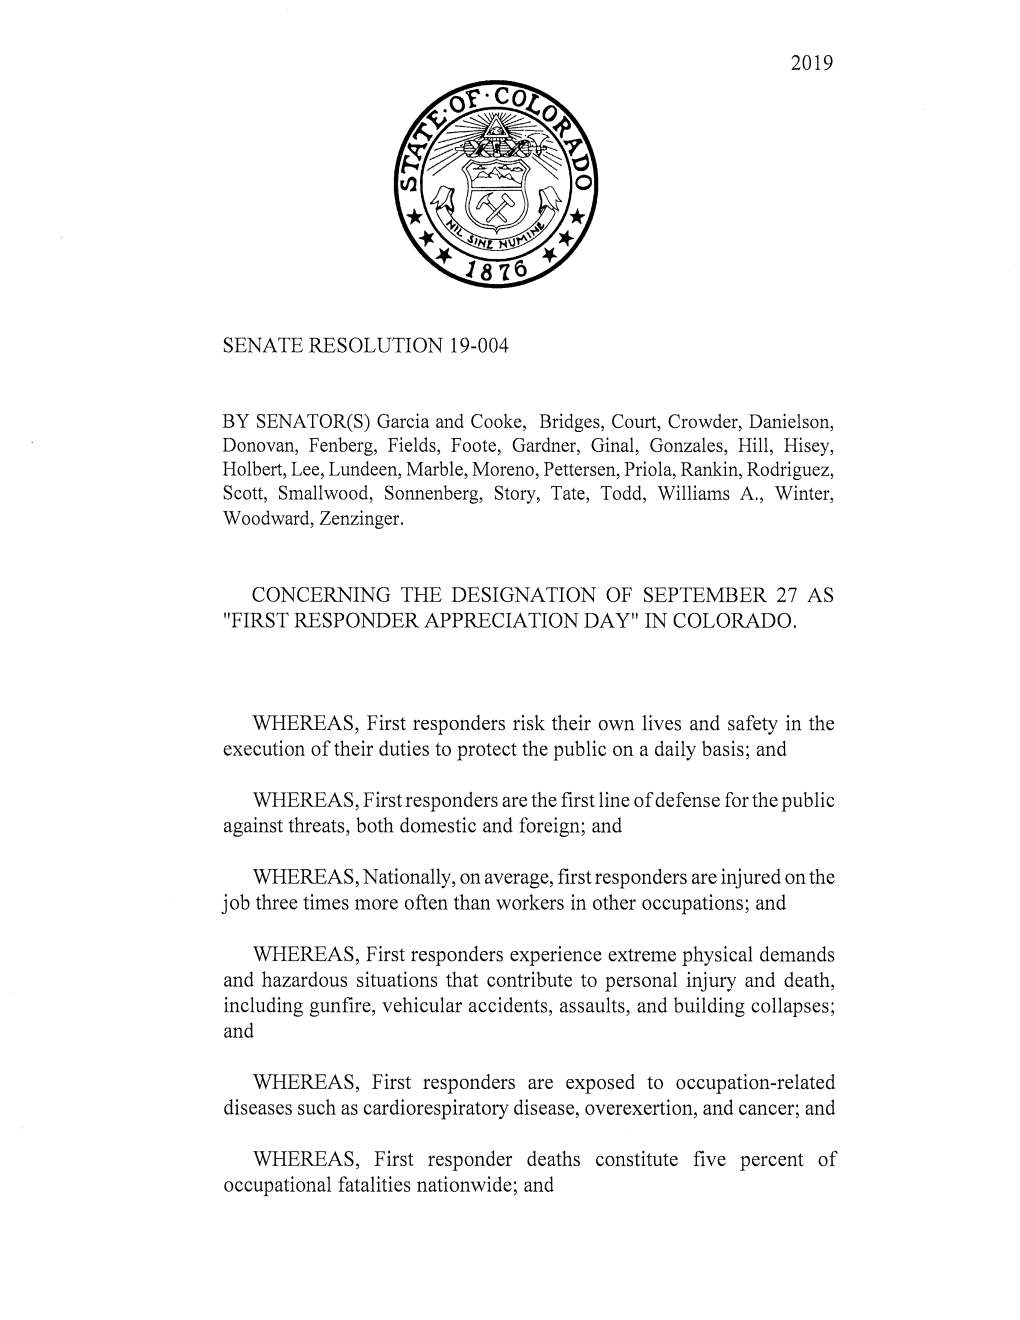 2019 Senate Resolution 19-004 Concerning the Designation